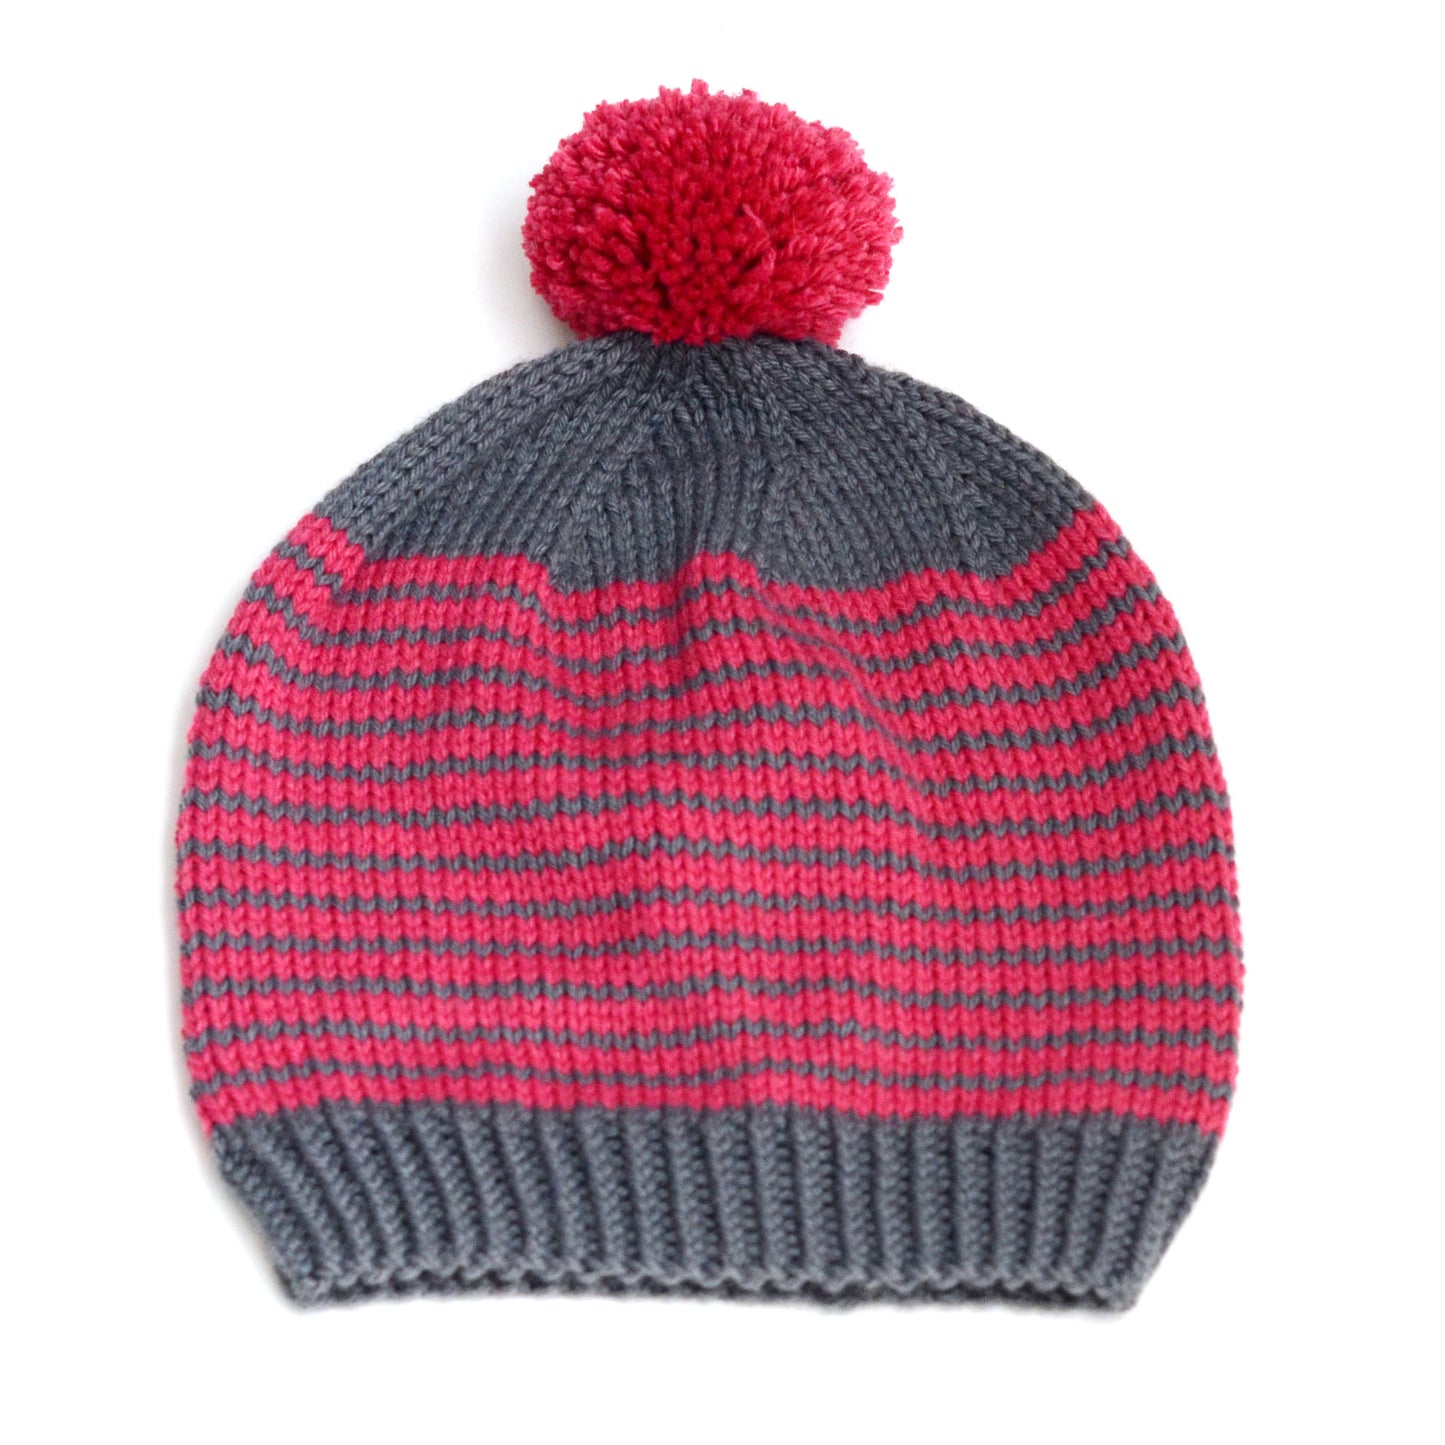 Universal Slouch Hat - Free Knitting Pattern Digital Download